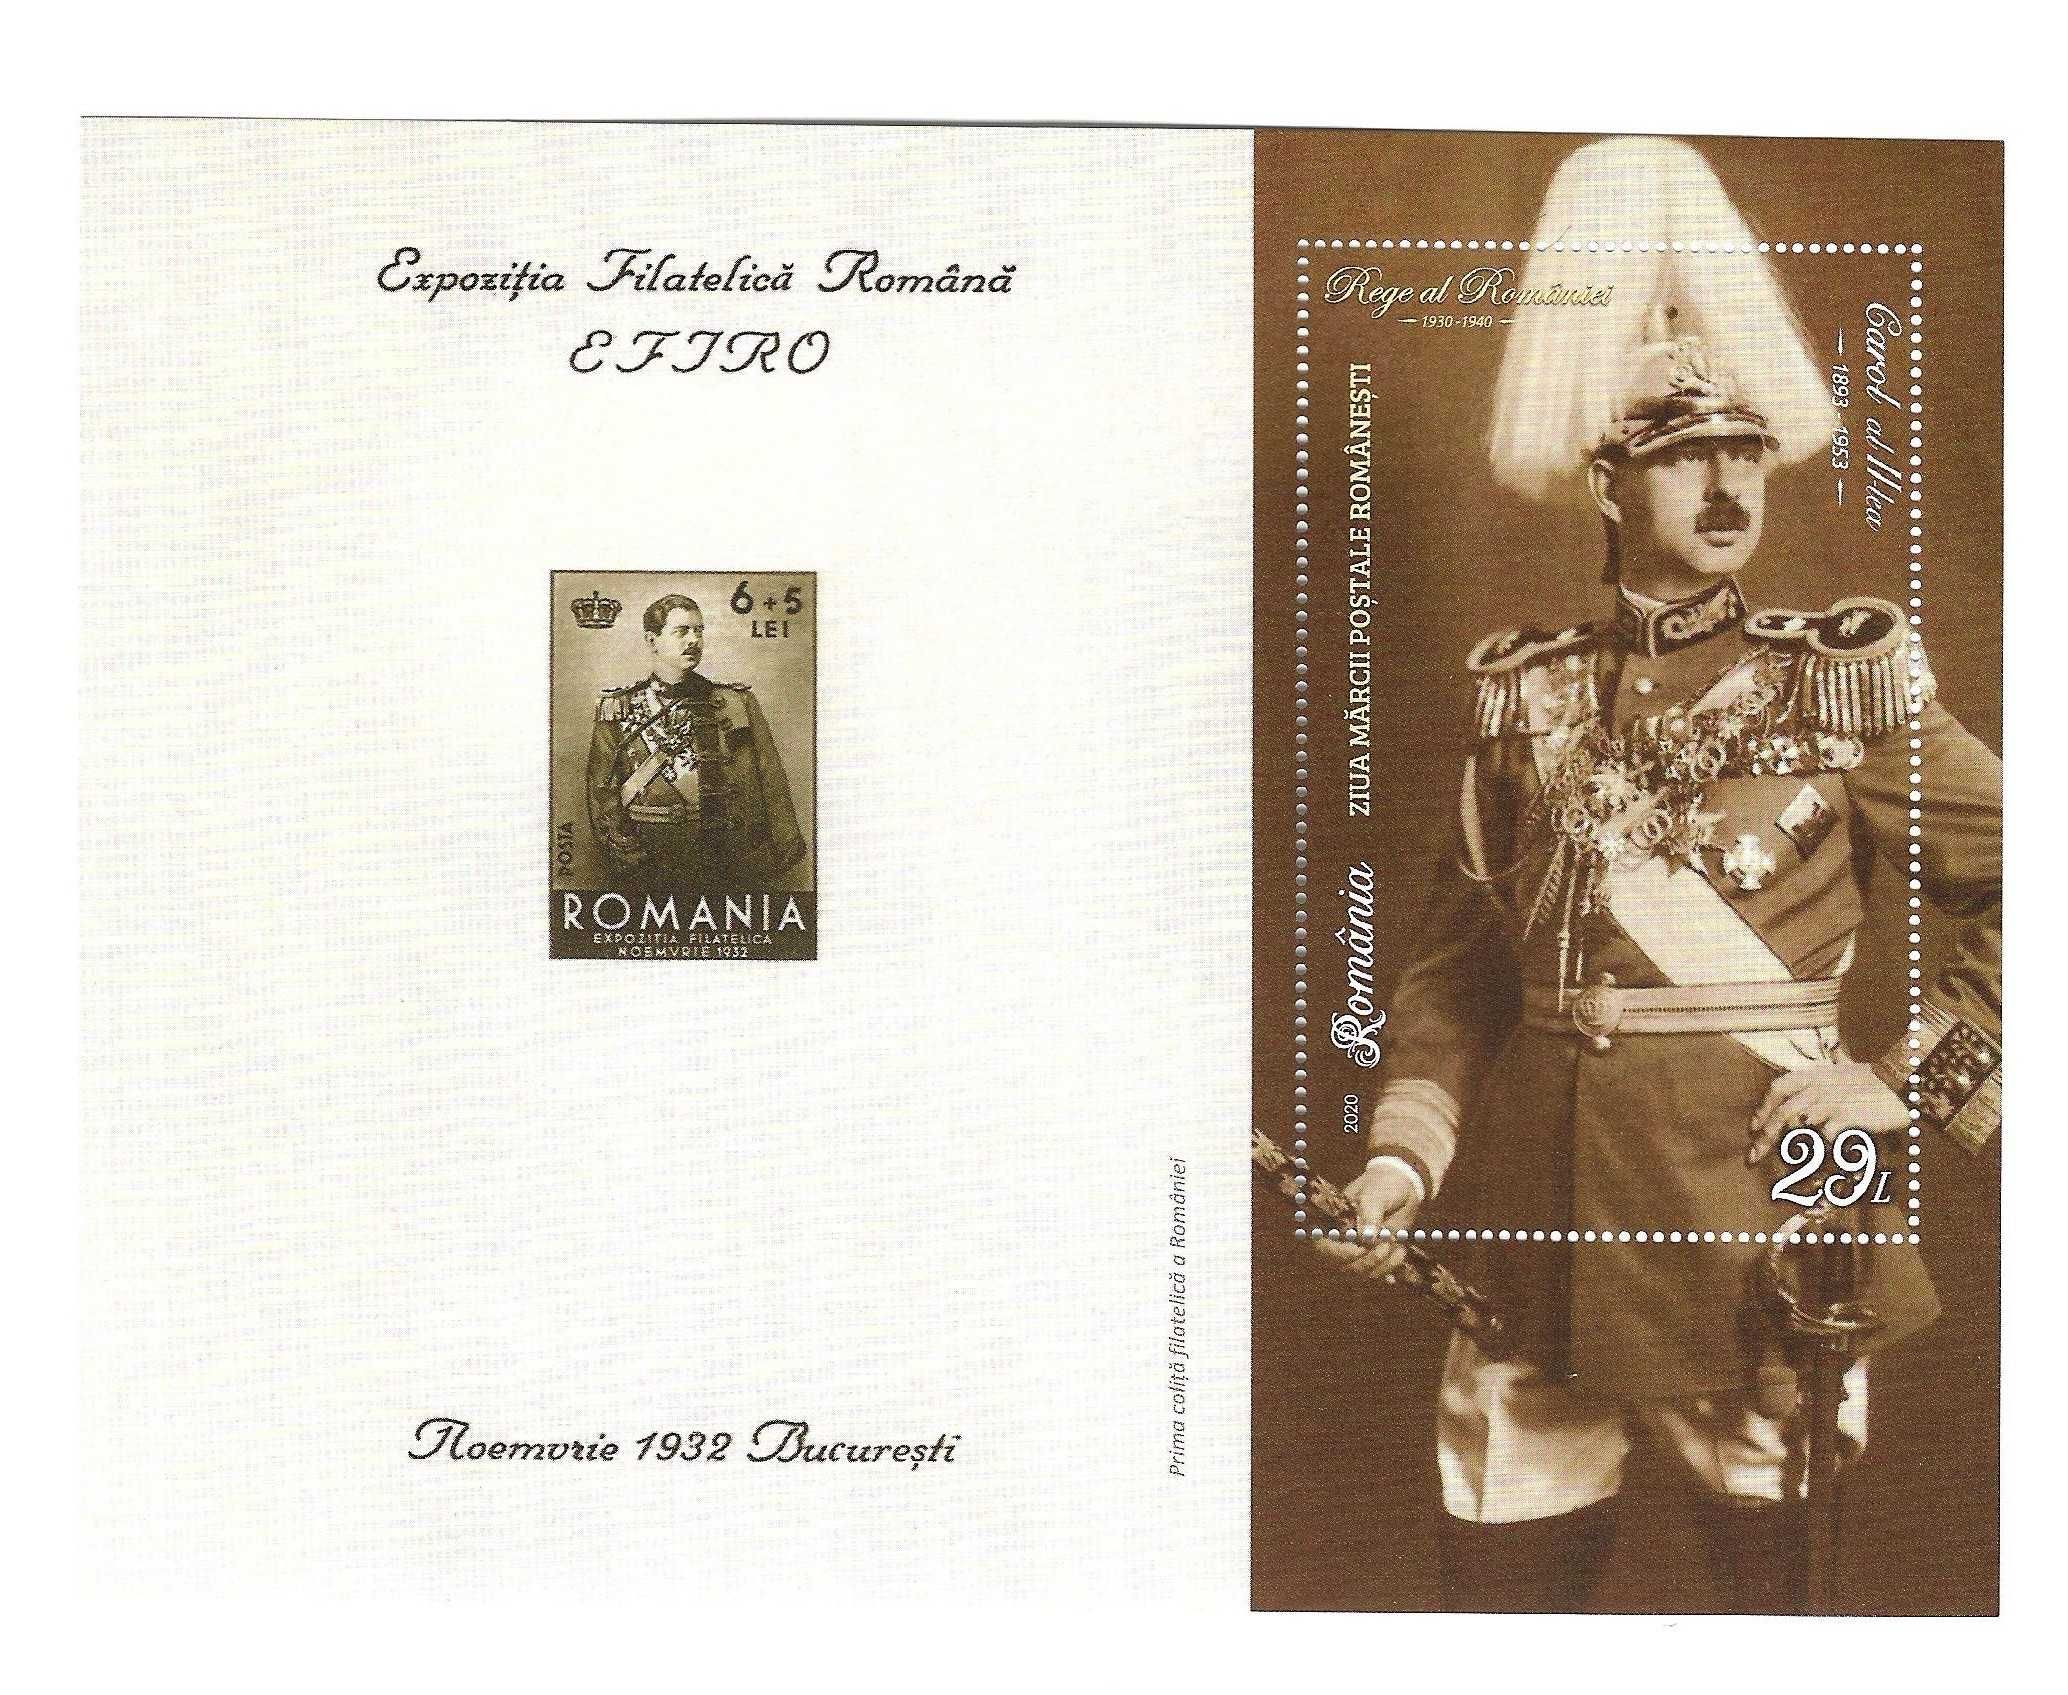 Super timbre colita nestampilata regele Carol II monarhia romaneasca